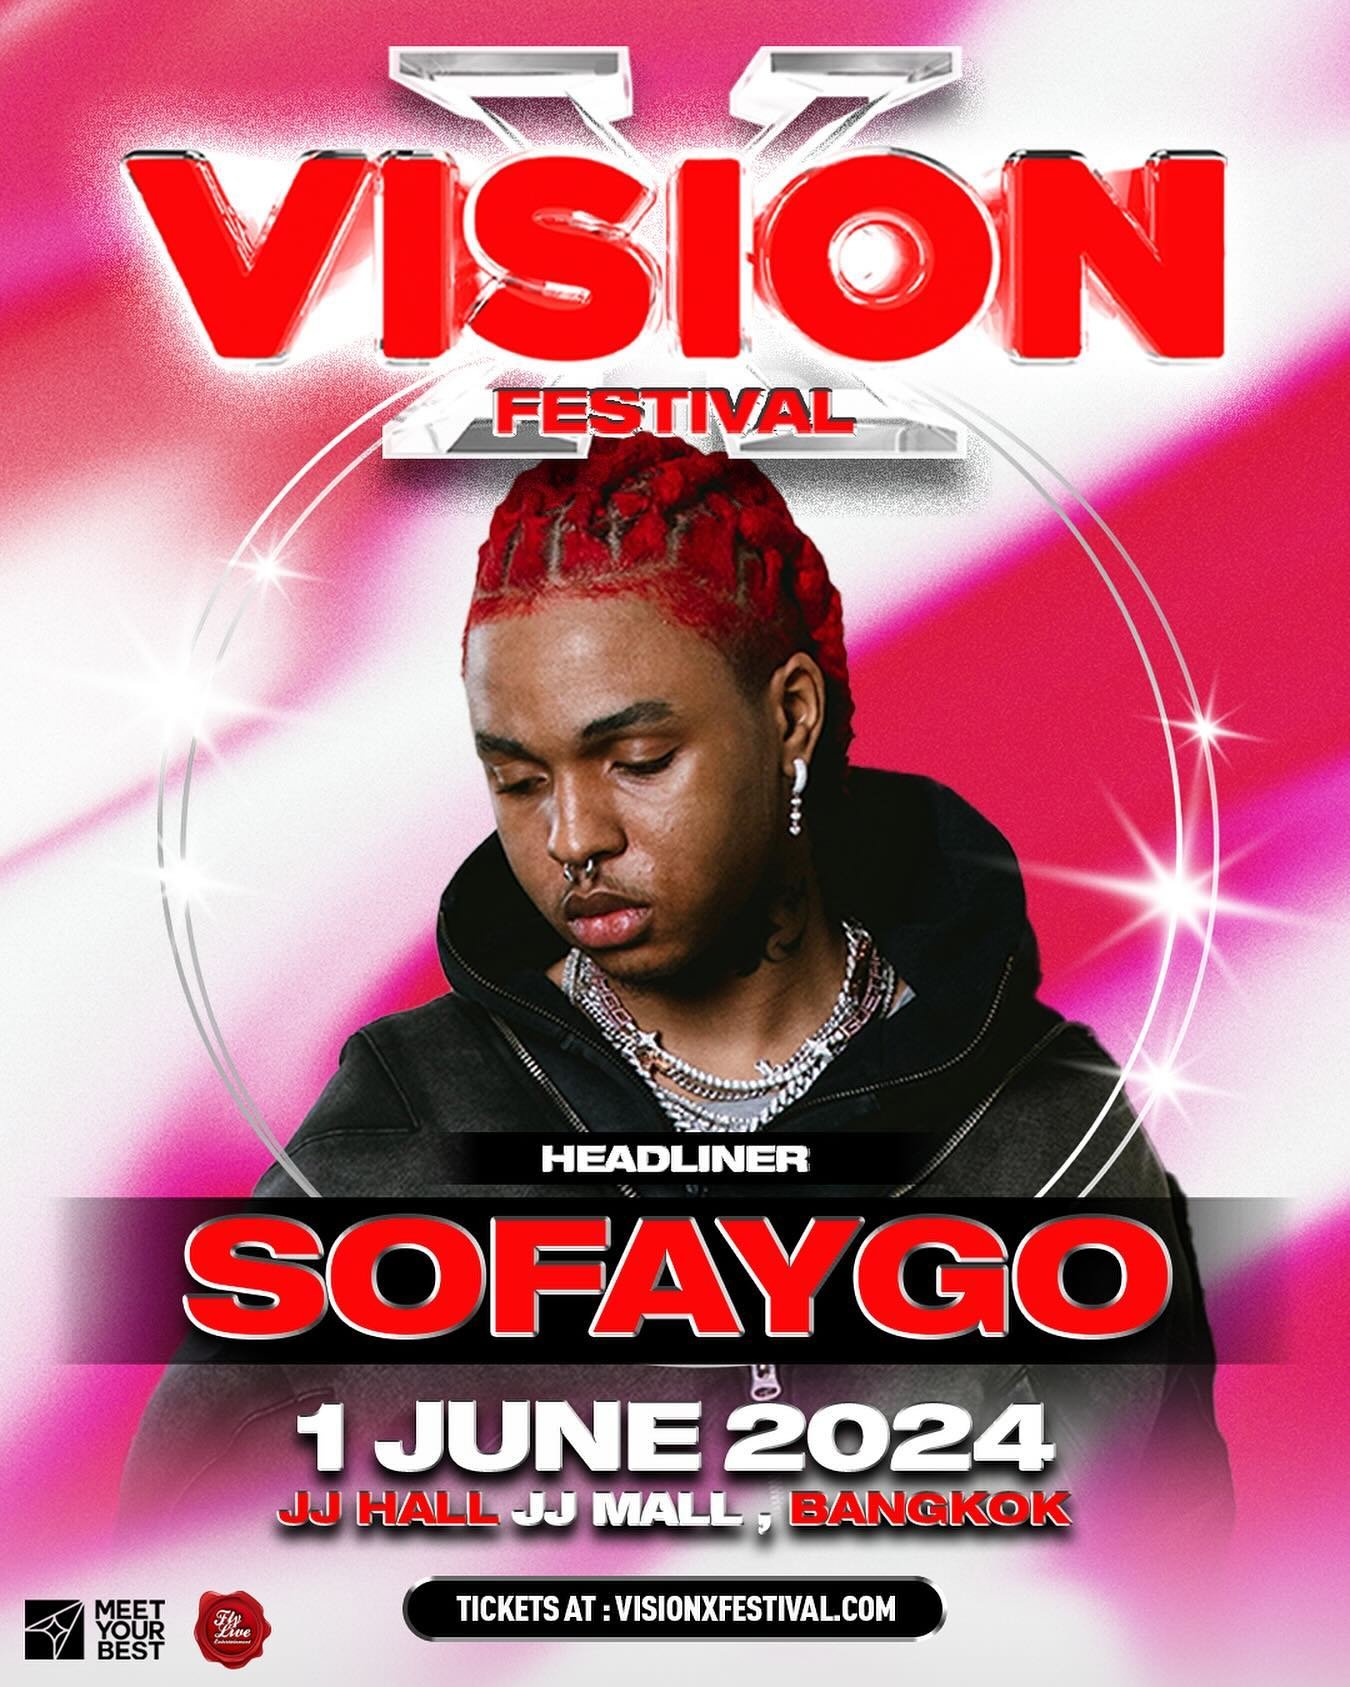 THE WAIT IS OVER ‼️
MEET OUR 2nd HEADLINER @sofaygo 

VISION X FESTIVAL 🇹🇭

1 JUNE 2024 📆

TIER 3 TICKETS OPEN NOW ⏰
MORE DETAILS @ visionxfestival.com

ยินดีต้อนรับ Headliner คนที่สองของเรา SoFaygo !! พบกับเขาได้ที่งาน Vision X Festival วันที่ 1 